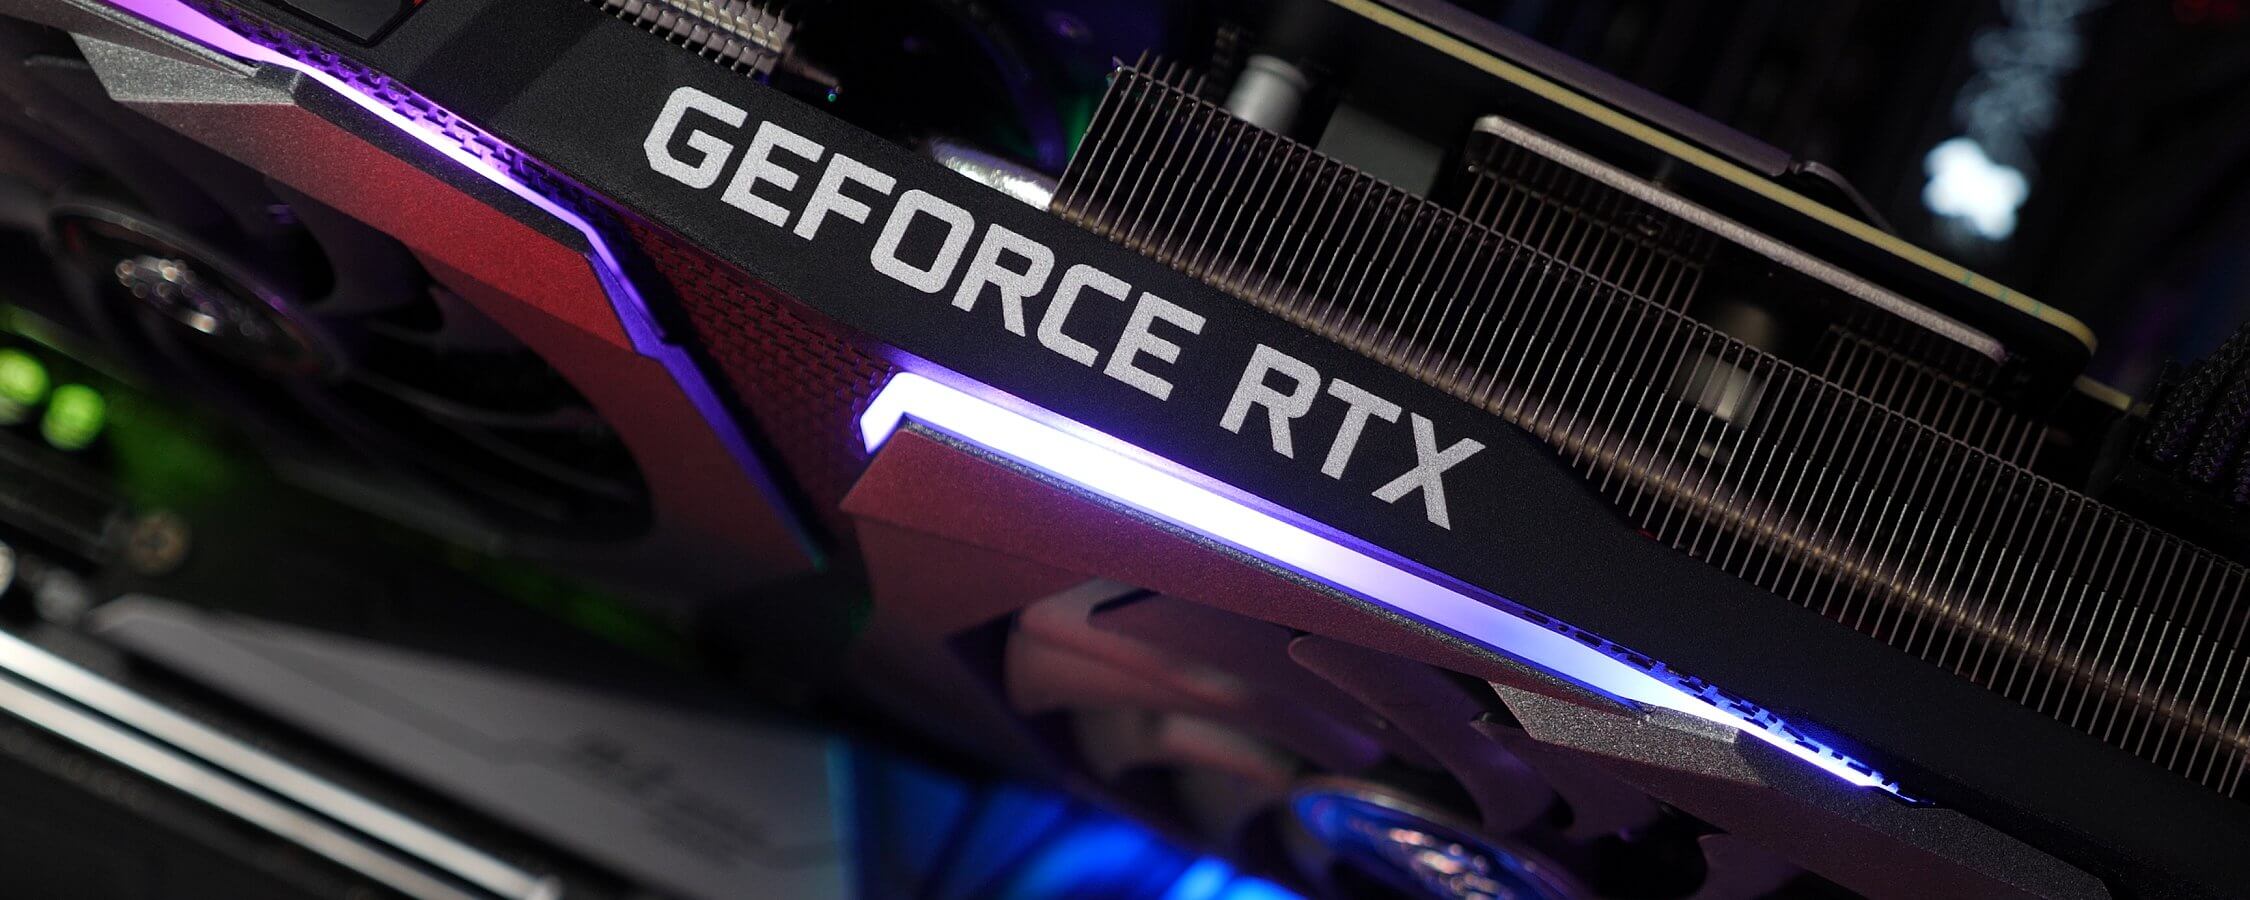 Nvidia is speed binning its GeForce RTX 2070